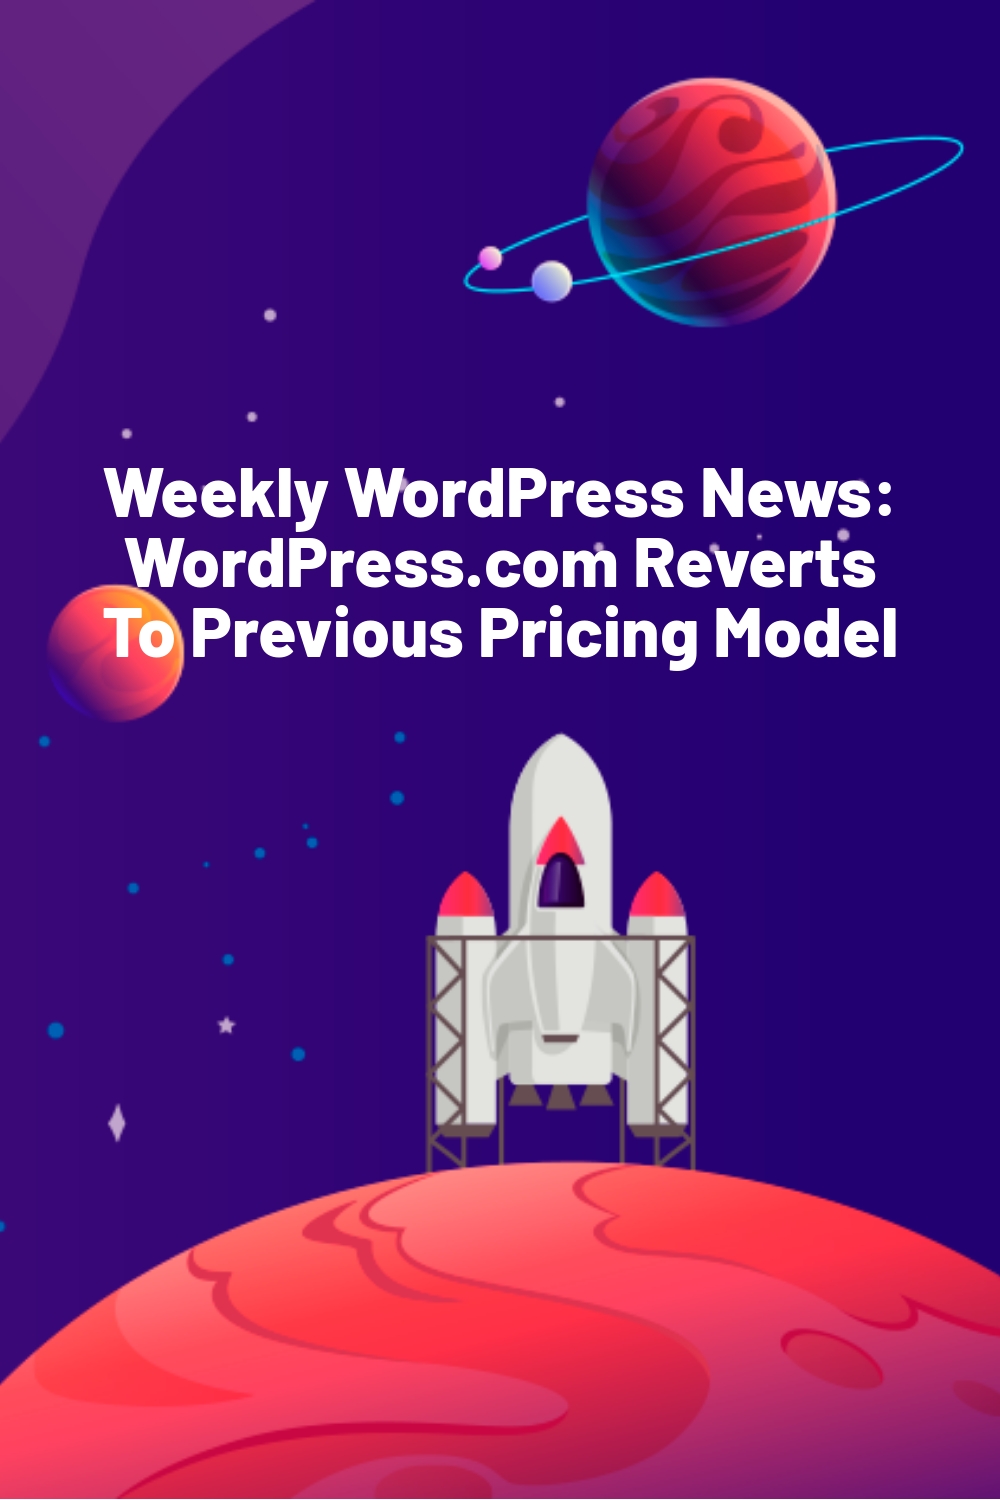 Weekly WordPress News: WordPress.com Reverts To Previous Pricing Model